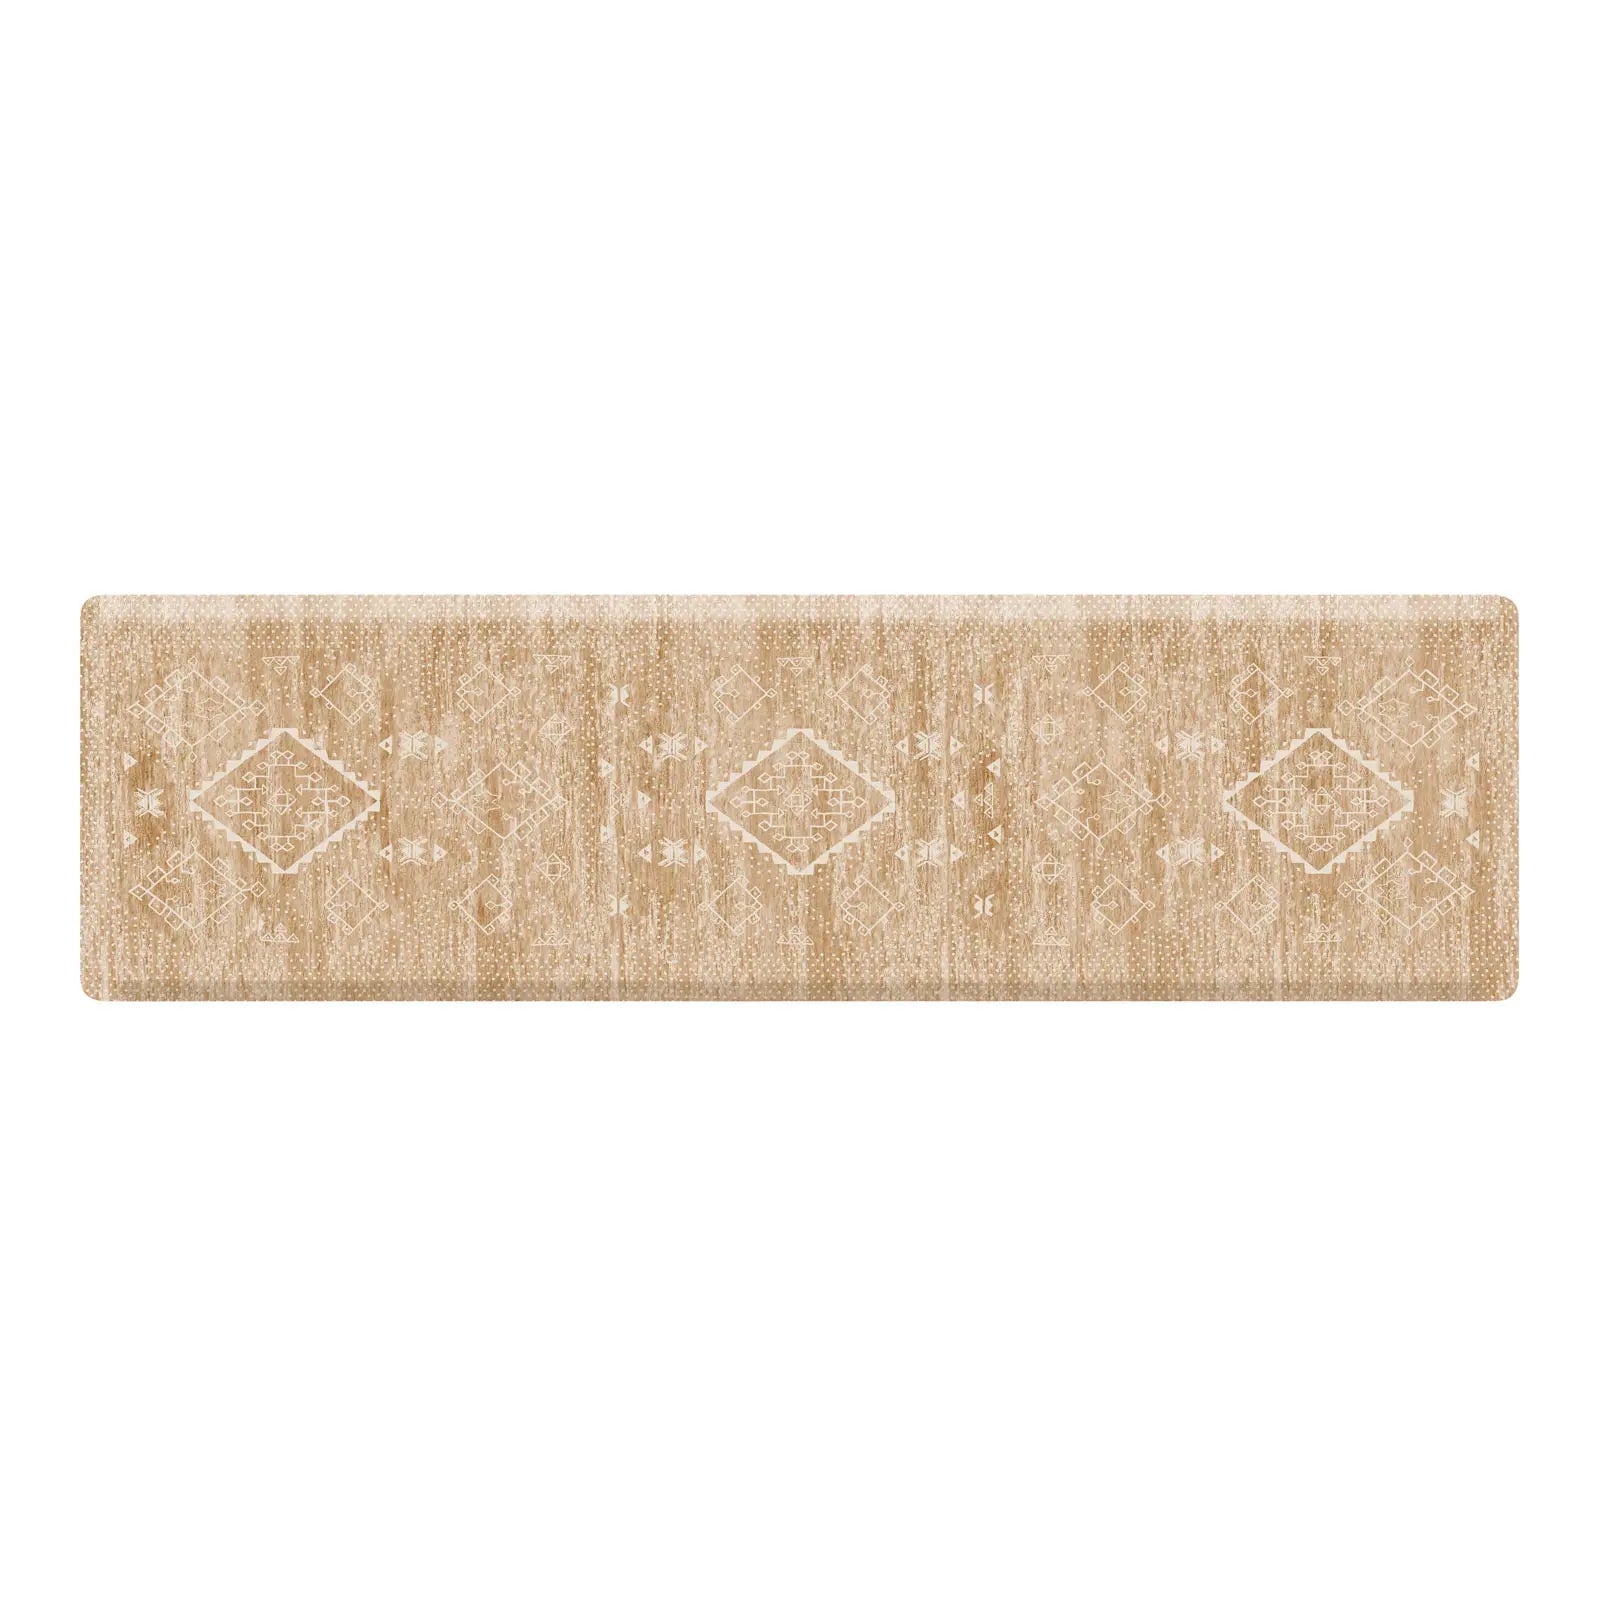 Ula Amber brown minimal boho pattern kitchen mat in size 30x108